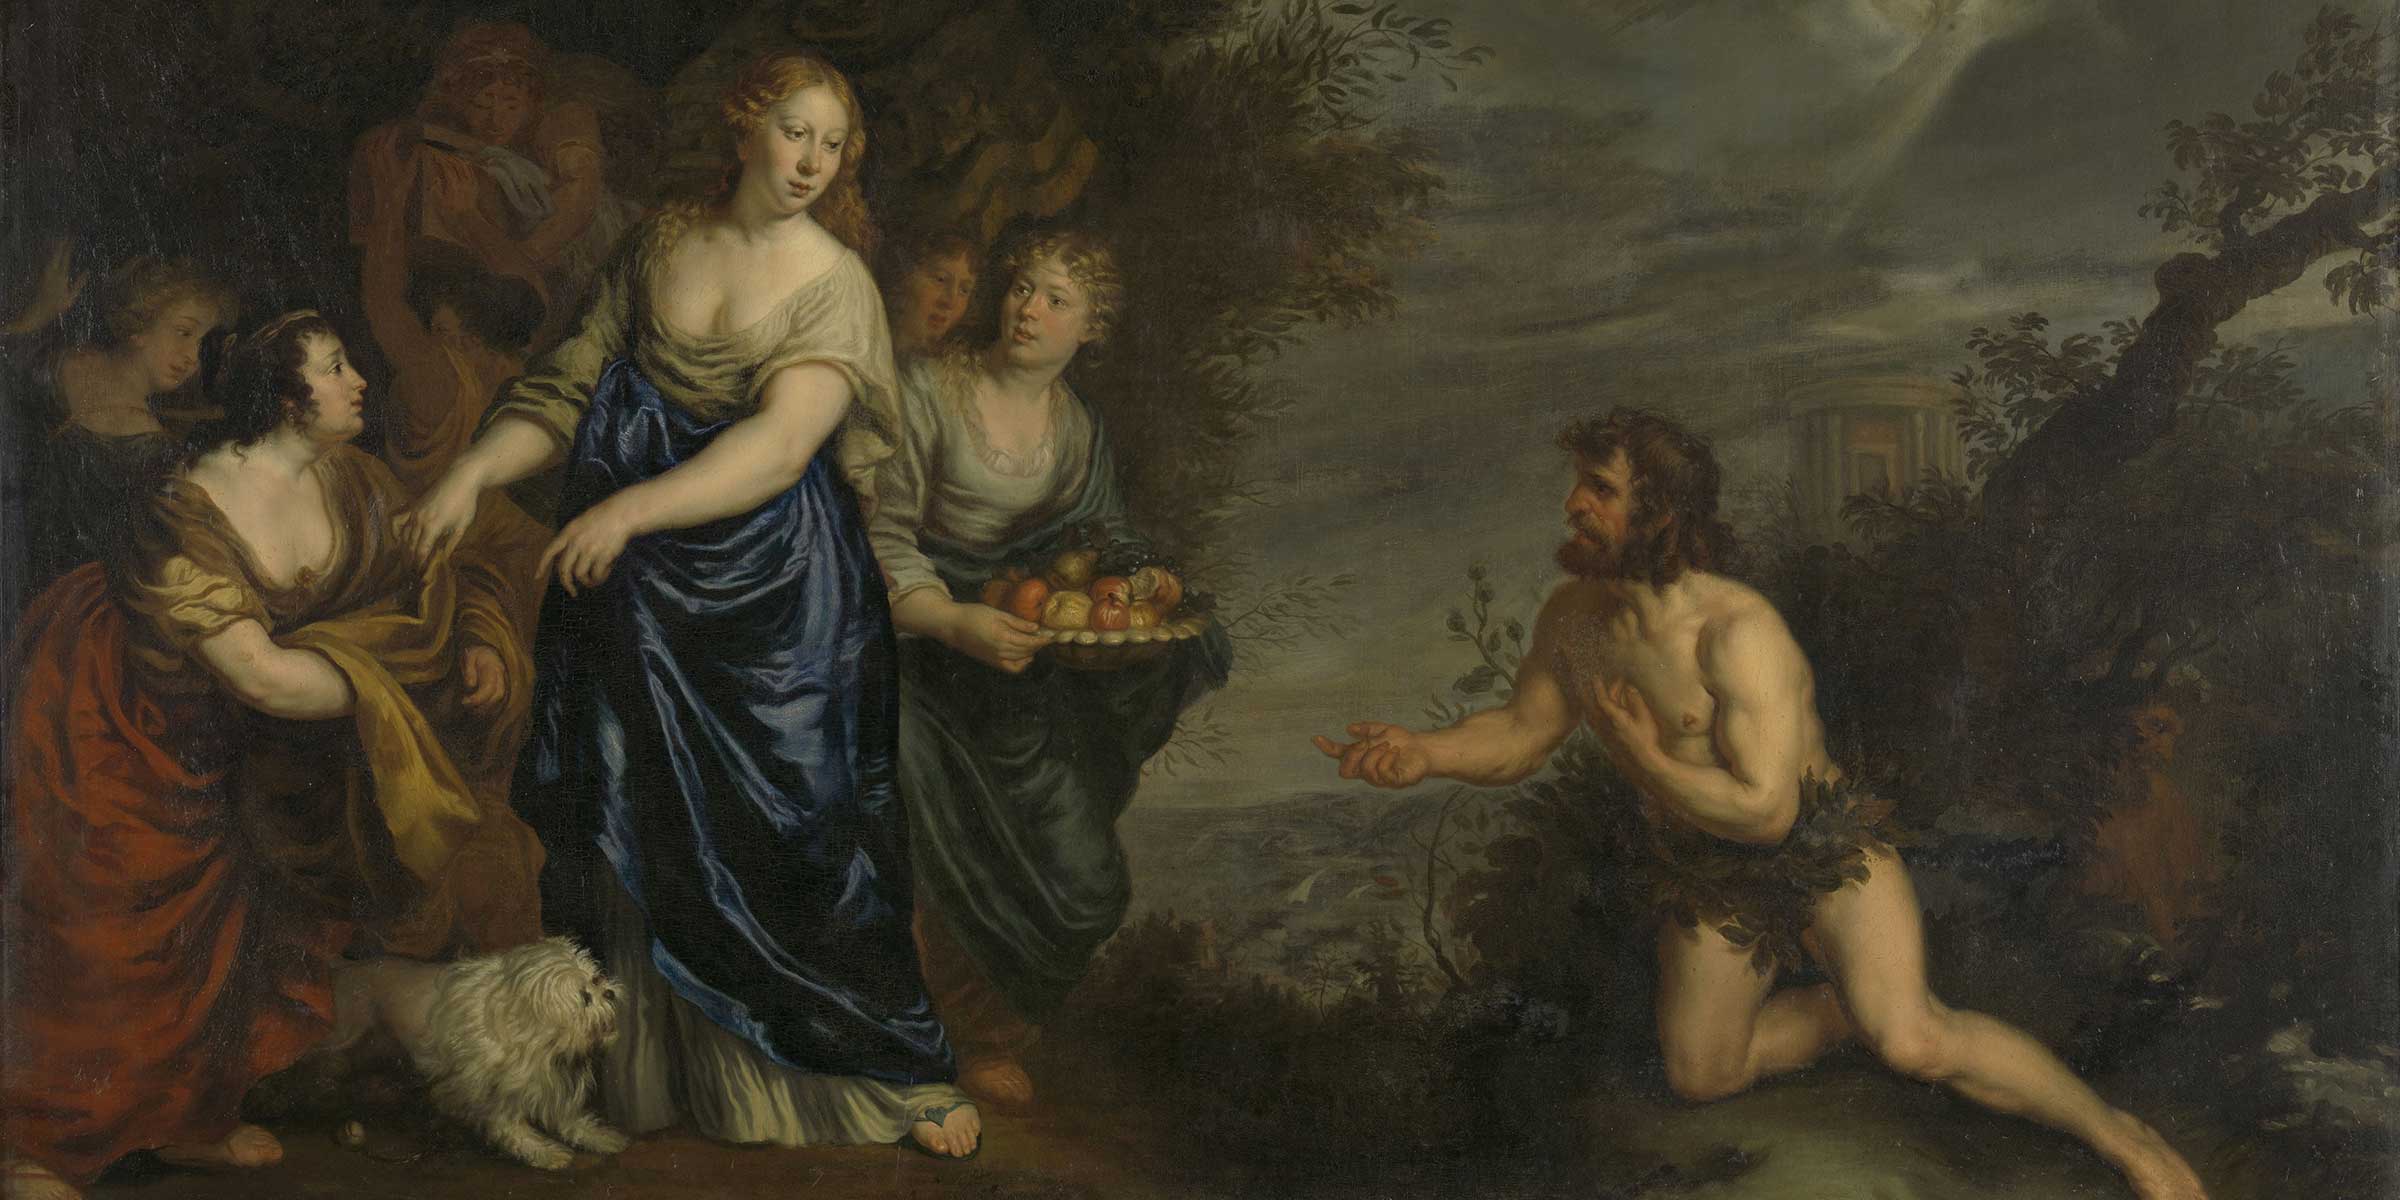 Odysseus and Nausicaa, by Joachim von Sandrart, mid-seventeenth century.